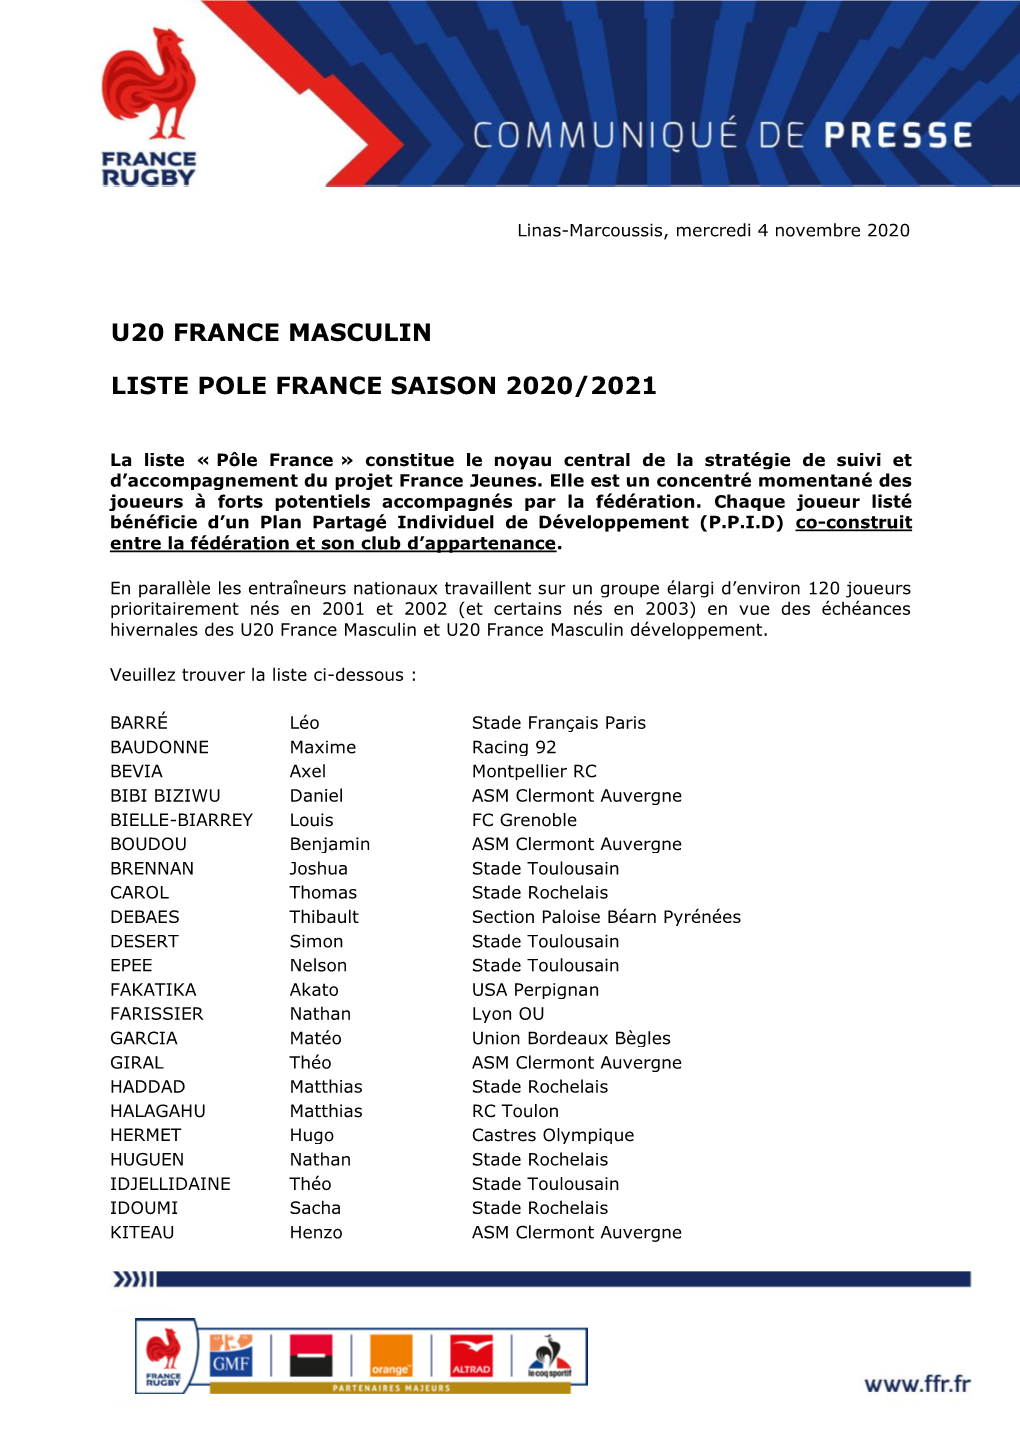 U20 France Masculin Liste Pole France Saison 2020/2021